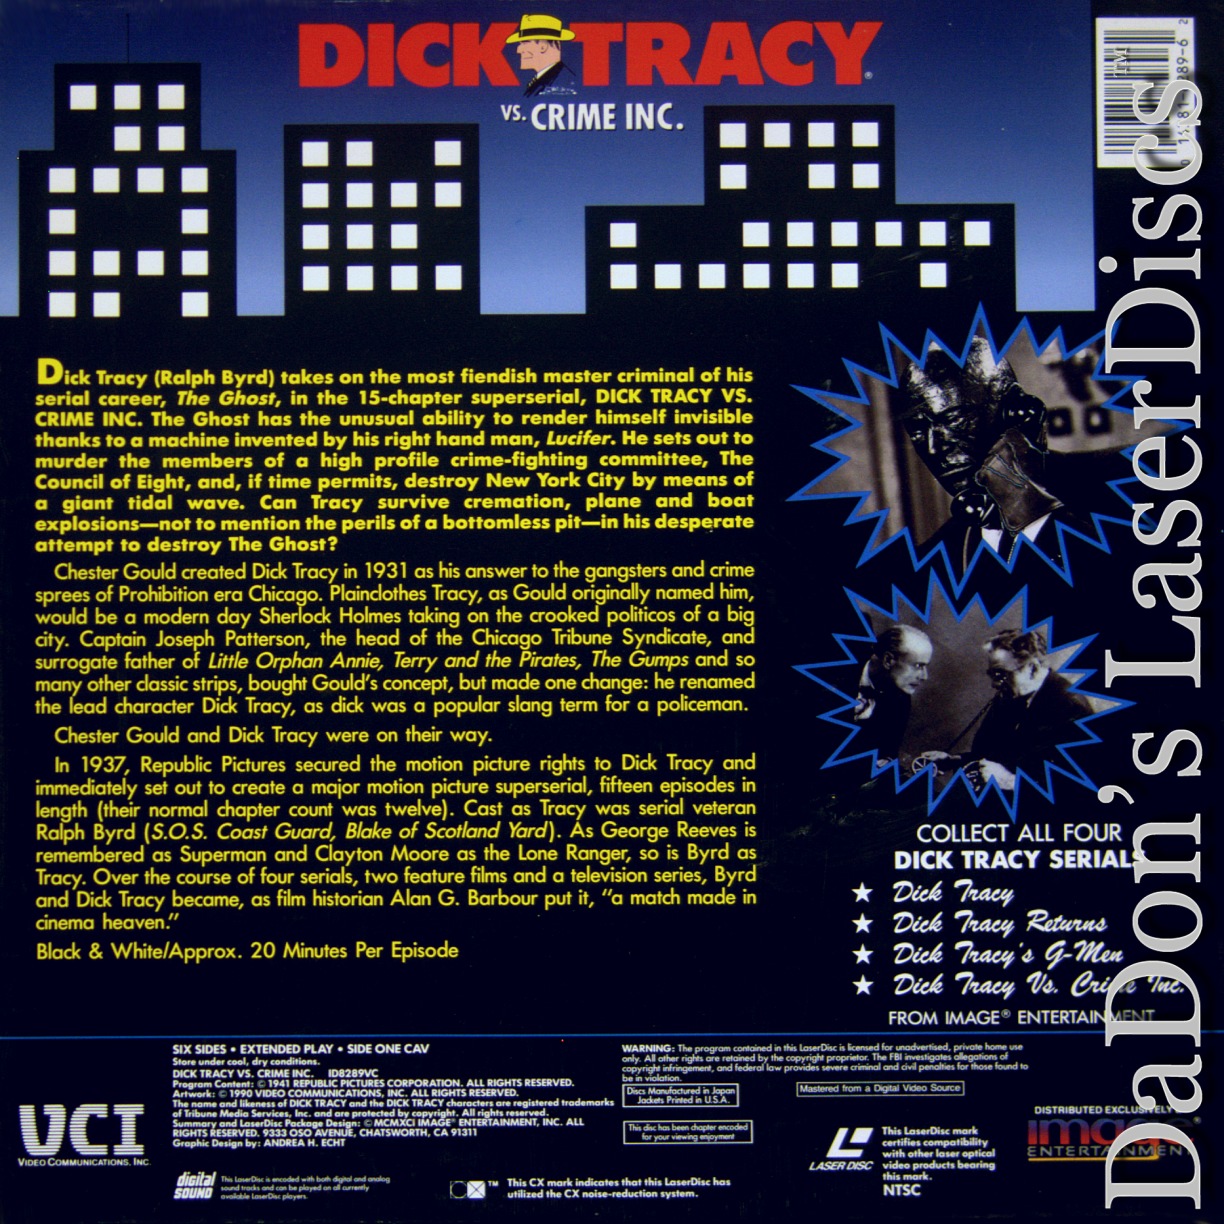 Dick tracy vs crime inc television show